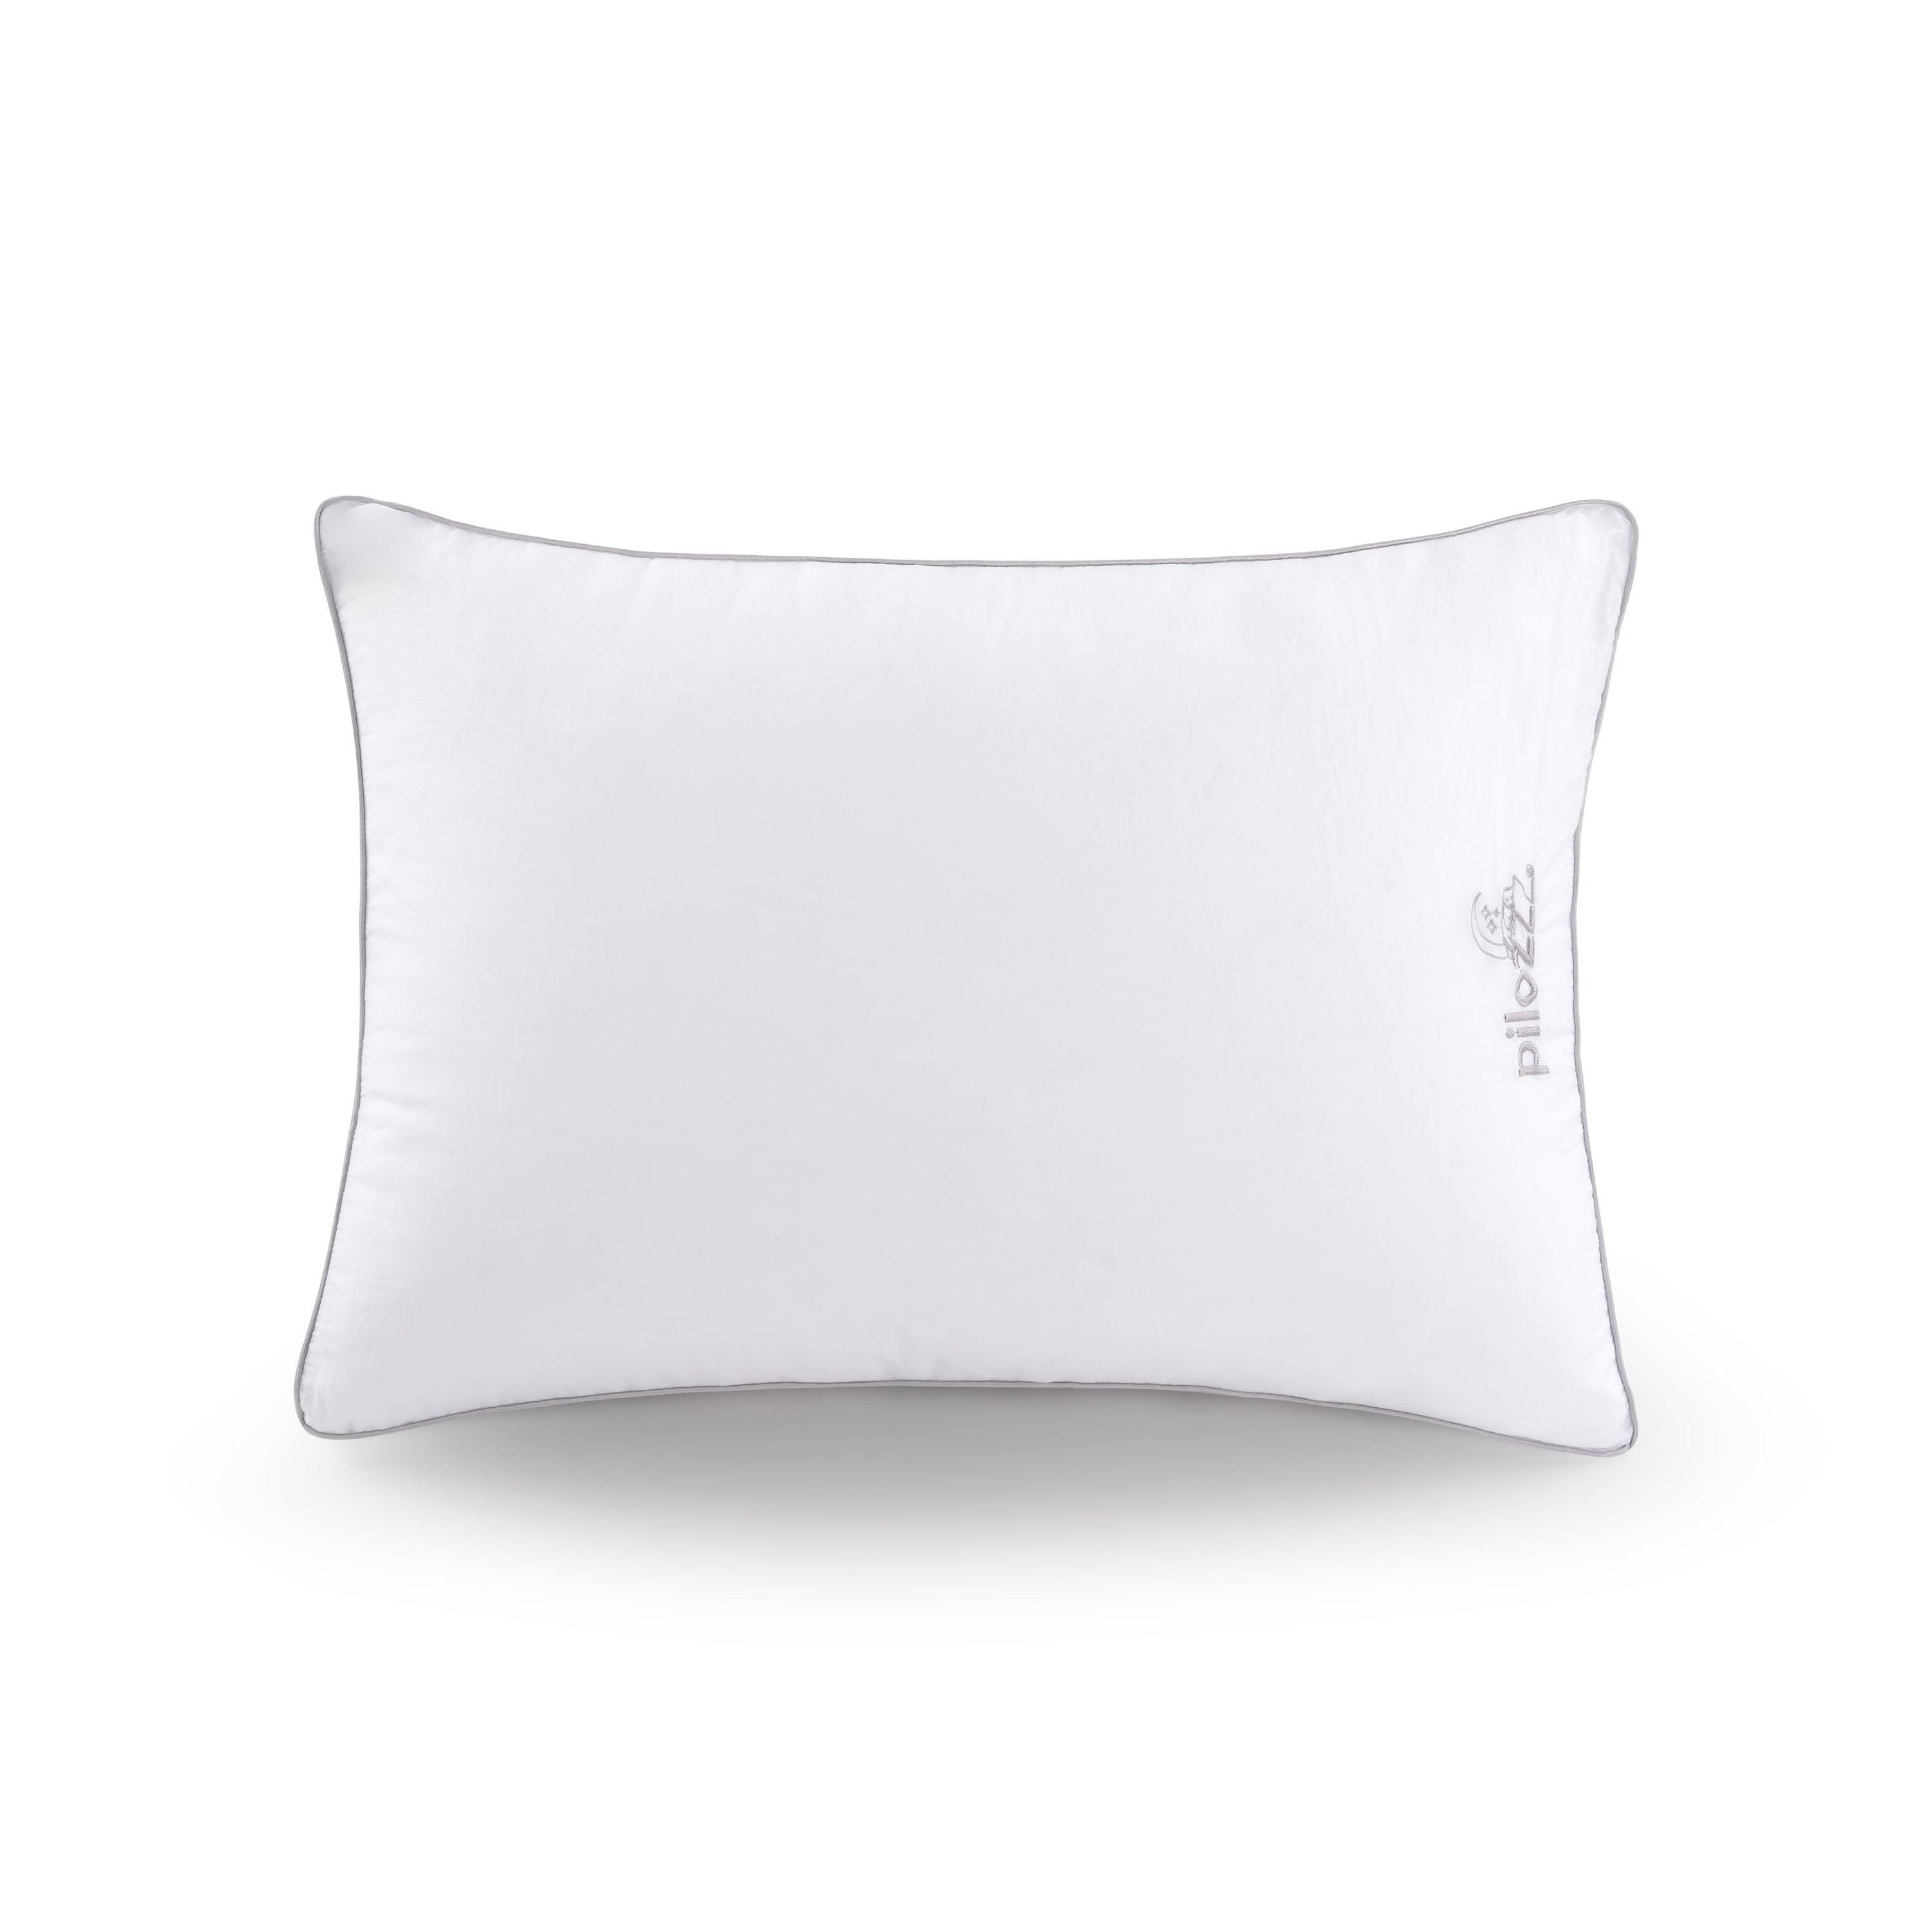 300 Thread Count Cotton Down Alternative Pillows | 2-Pack